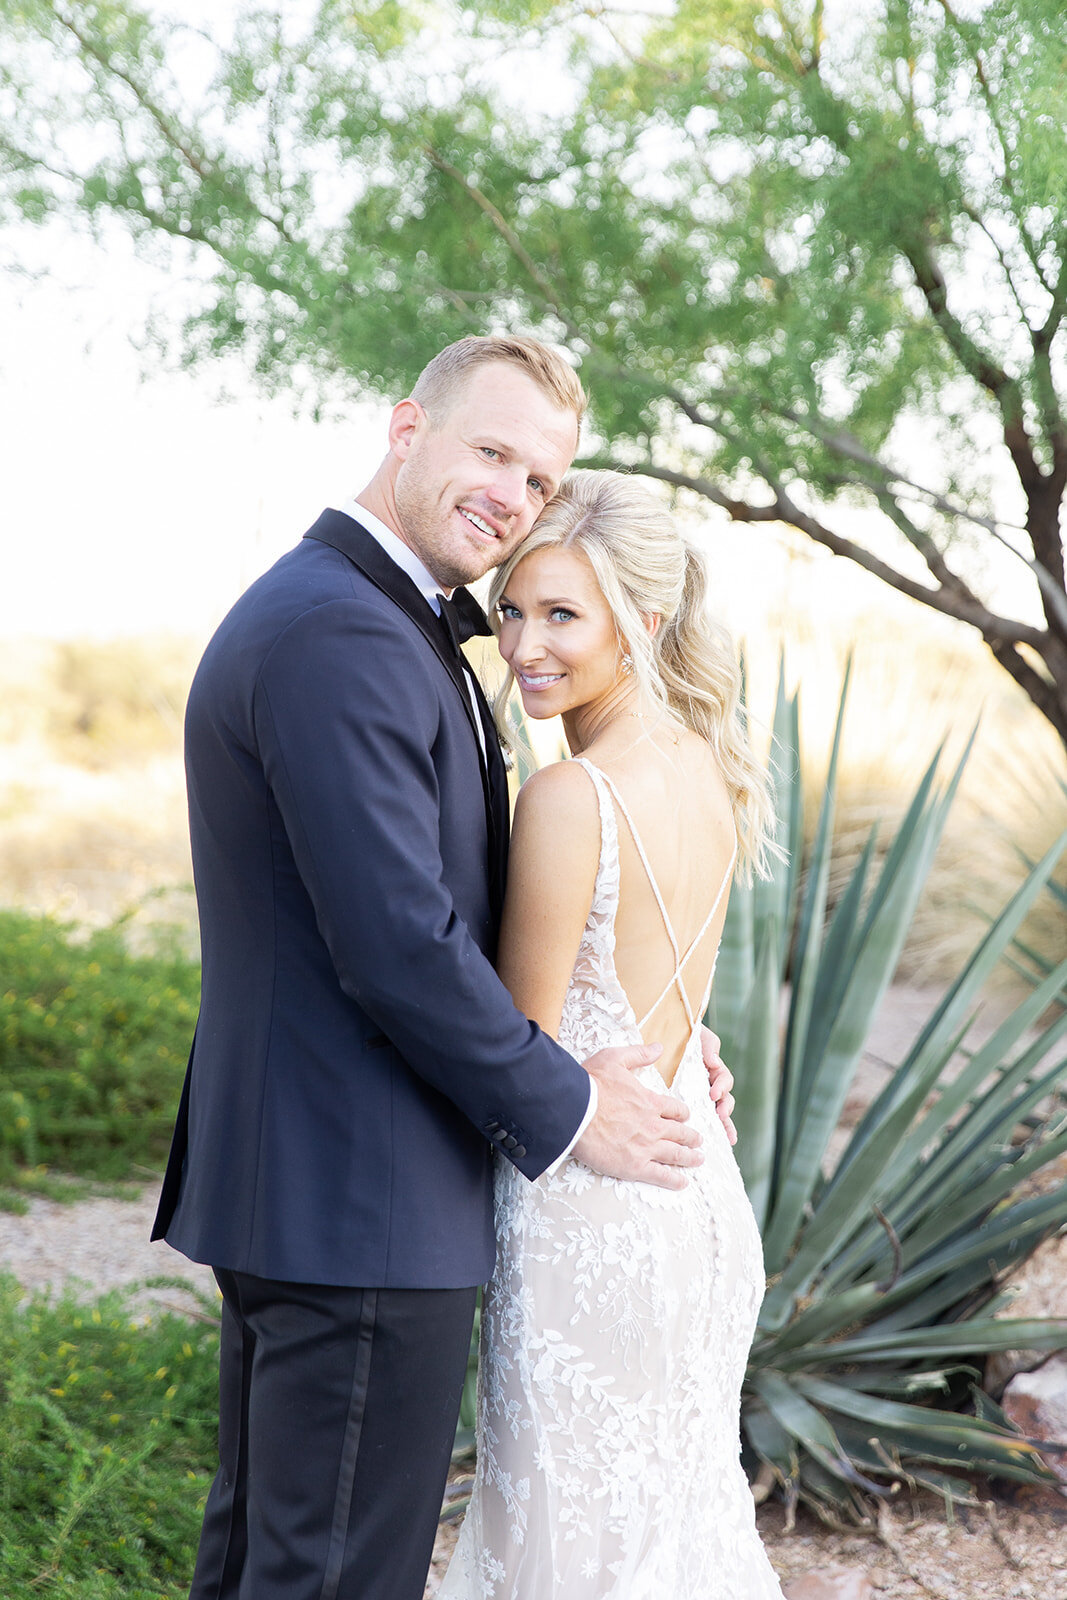 Karlie Colleen Photography - Ashley & Grant Wedding - The Paseo - Phoenix Arizona-697